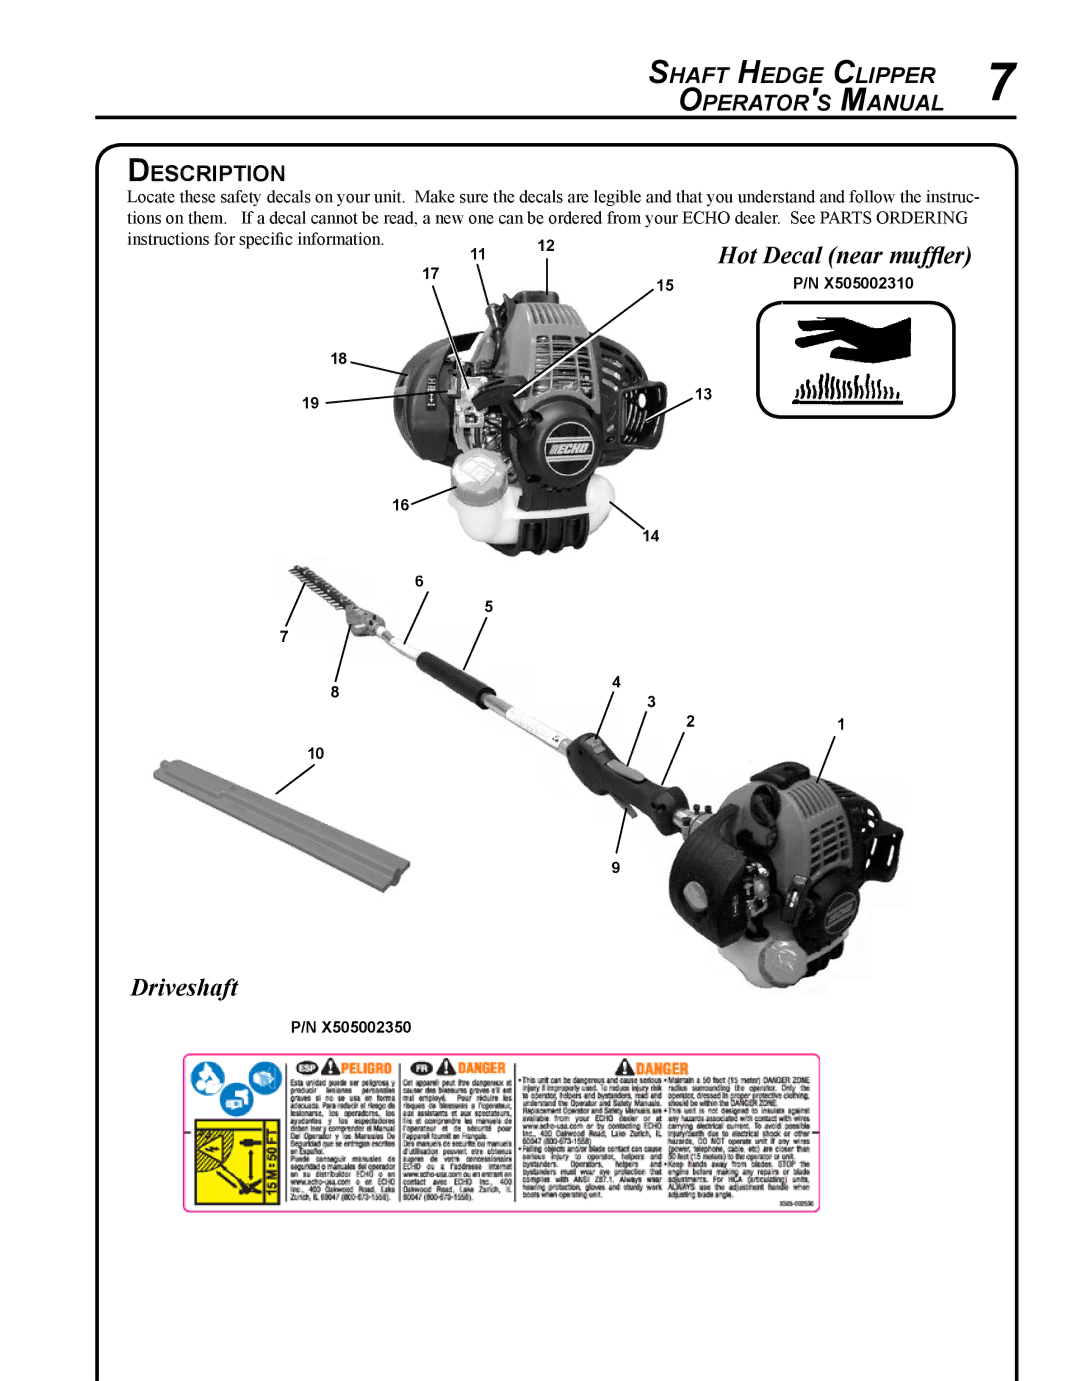 Echo SHC-265 manual Hot Decal near muffler Driveshaft, Description 